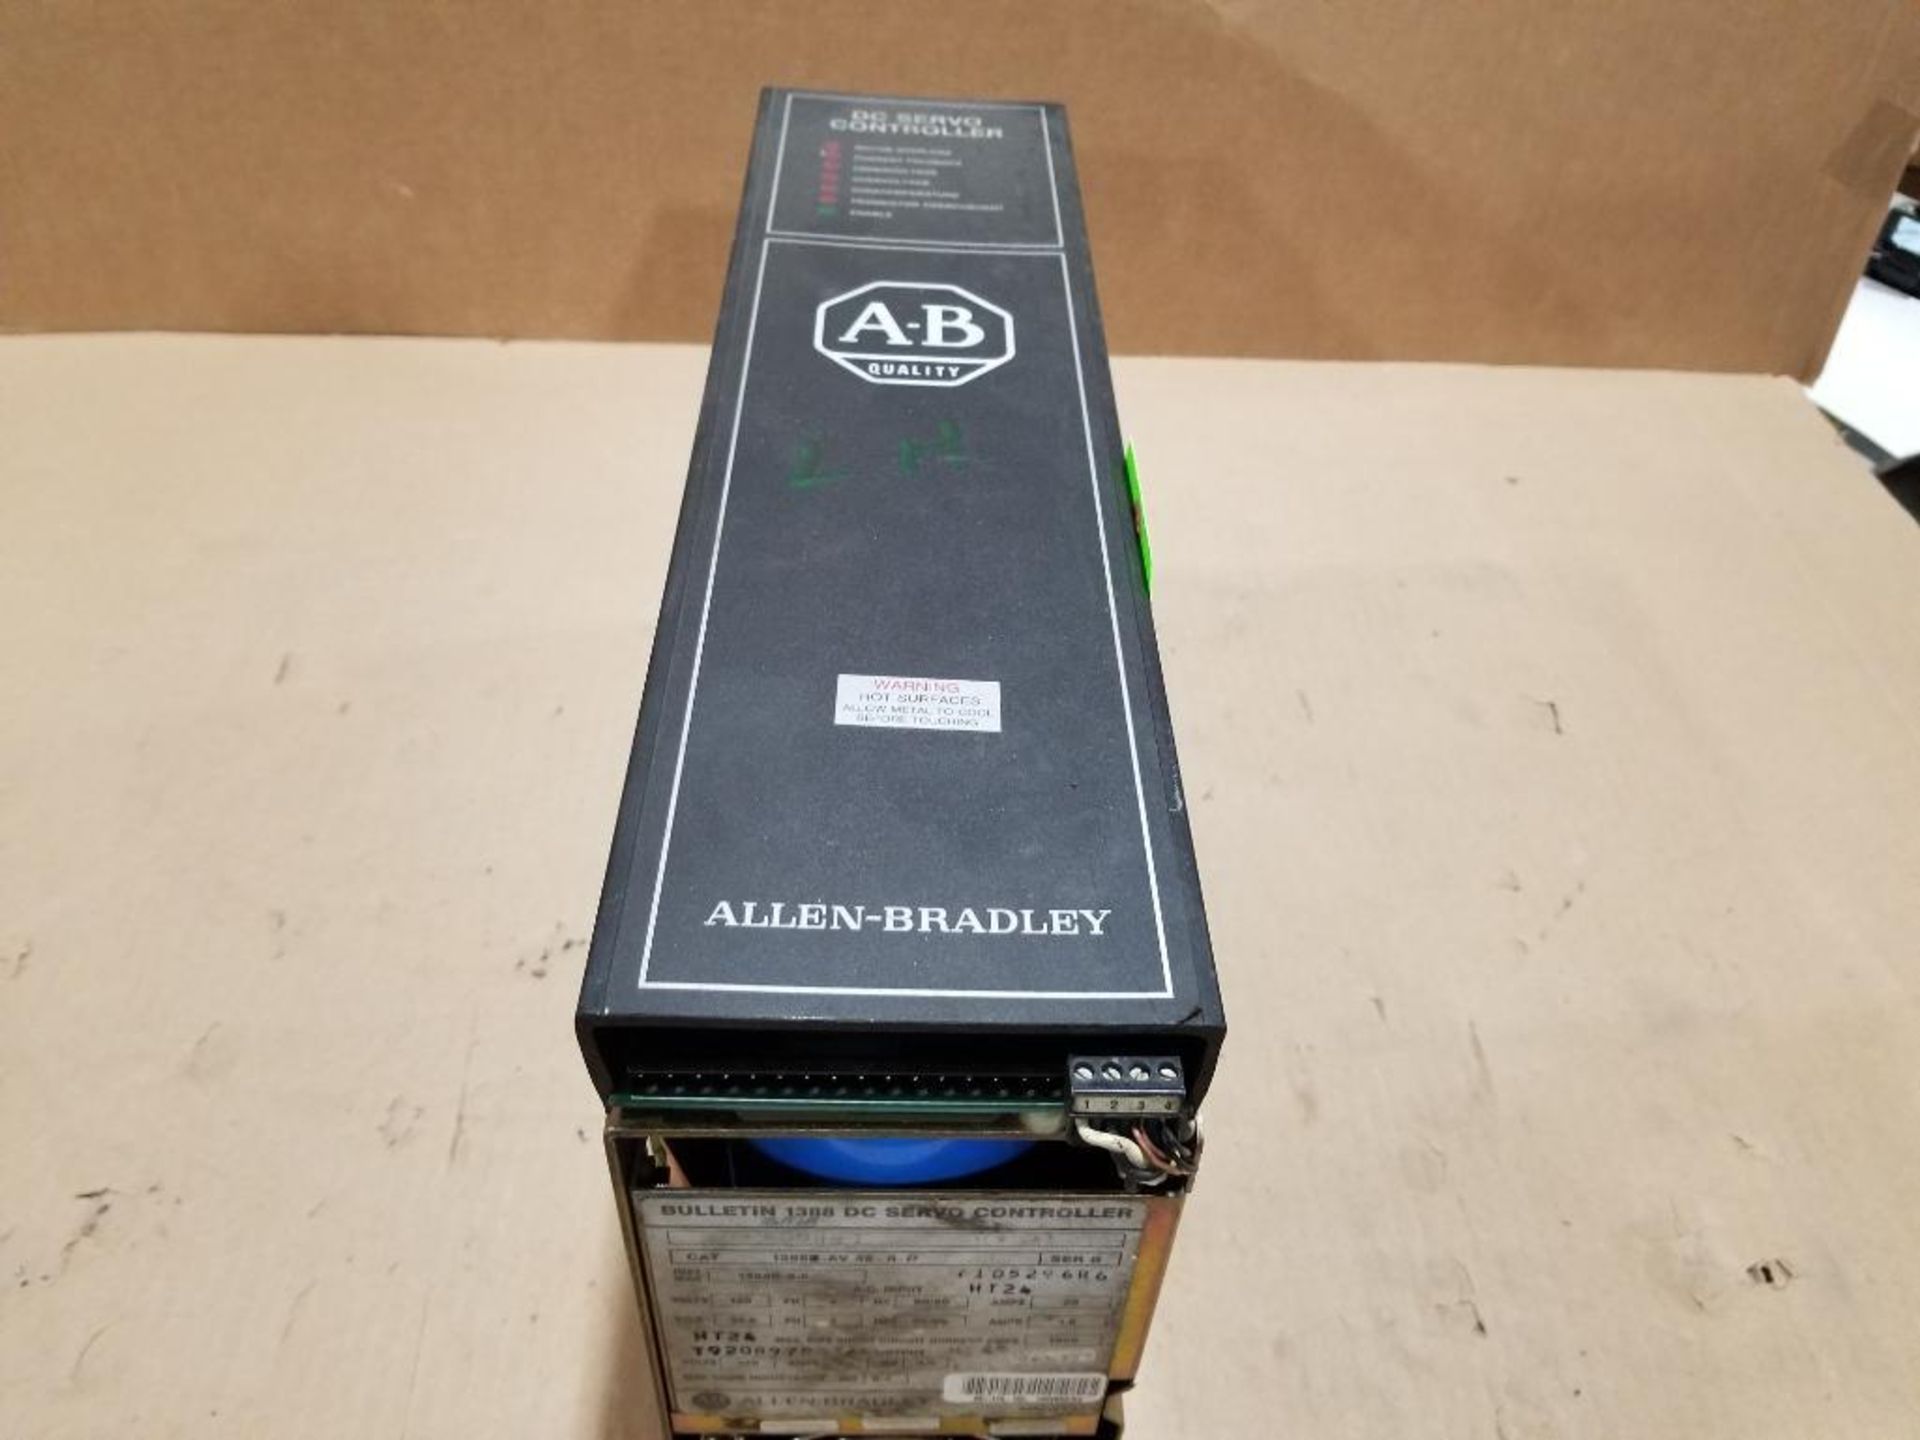 Allen Bradley DC servo controller. Catalog 1388-AV-40-A-D.